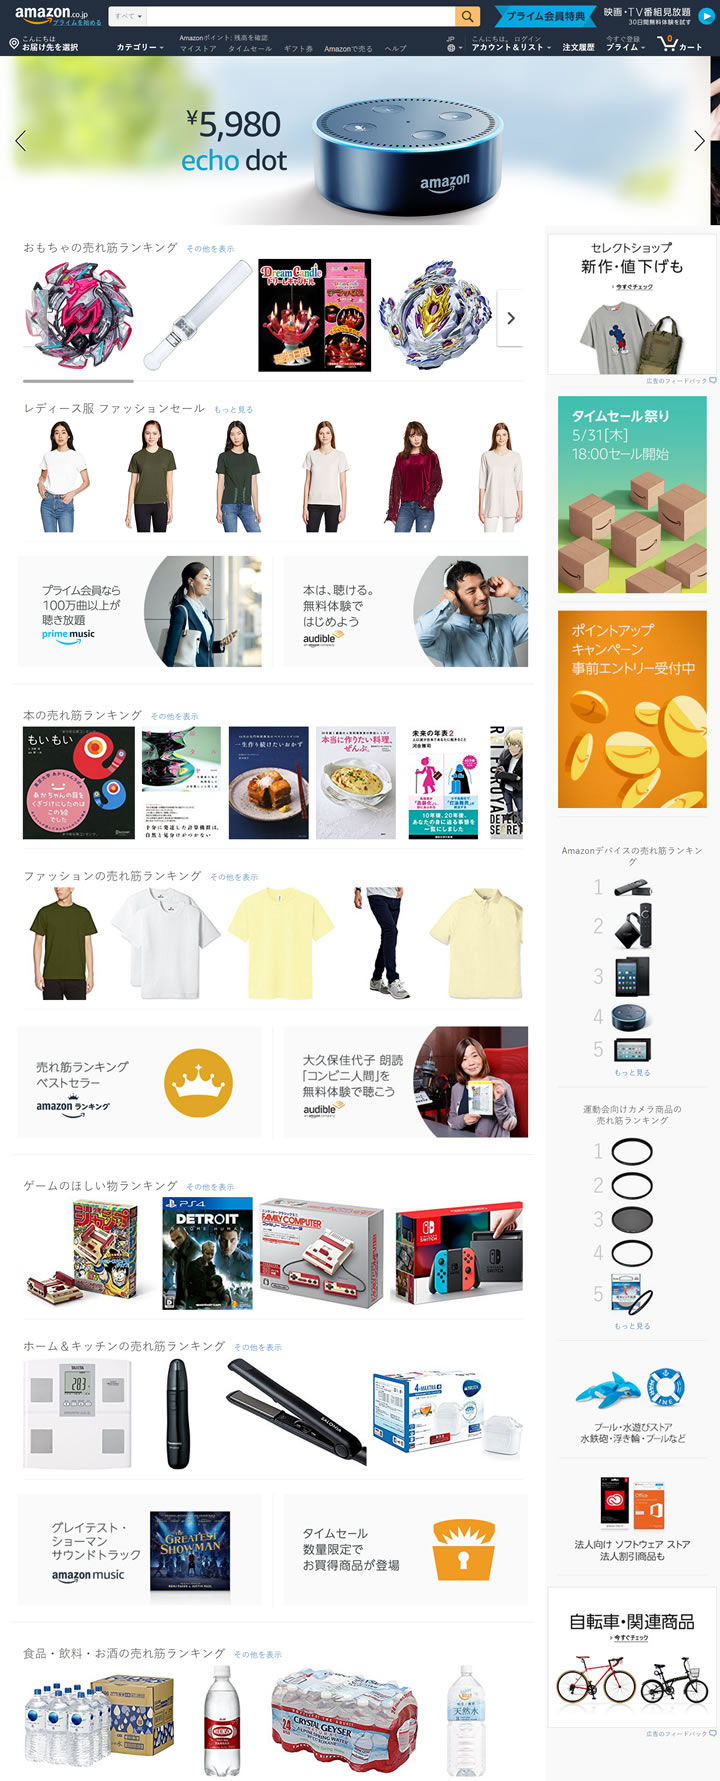 Amazon Japan Official Website: Amazon.co.jp - World68 Global Shopping